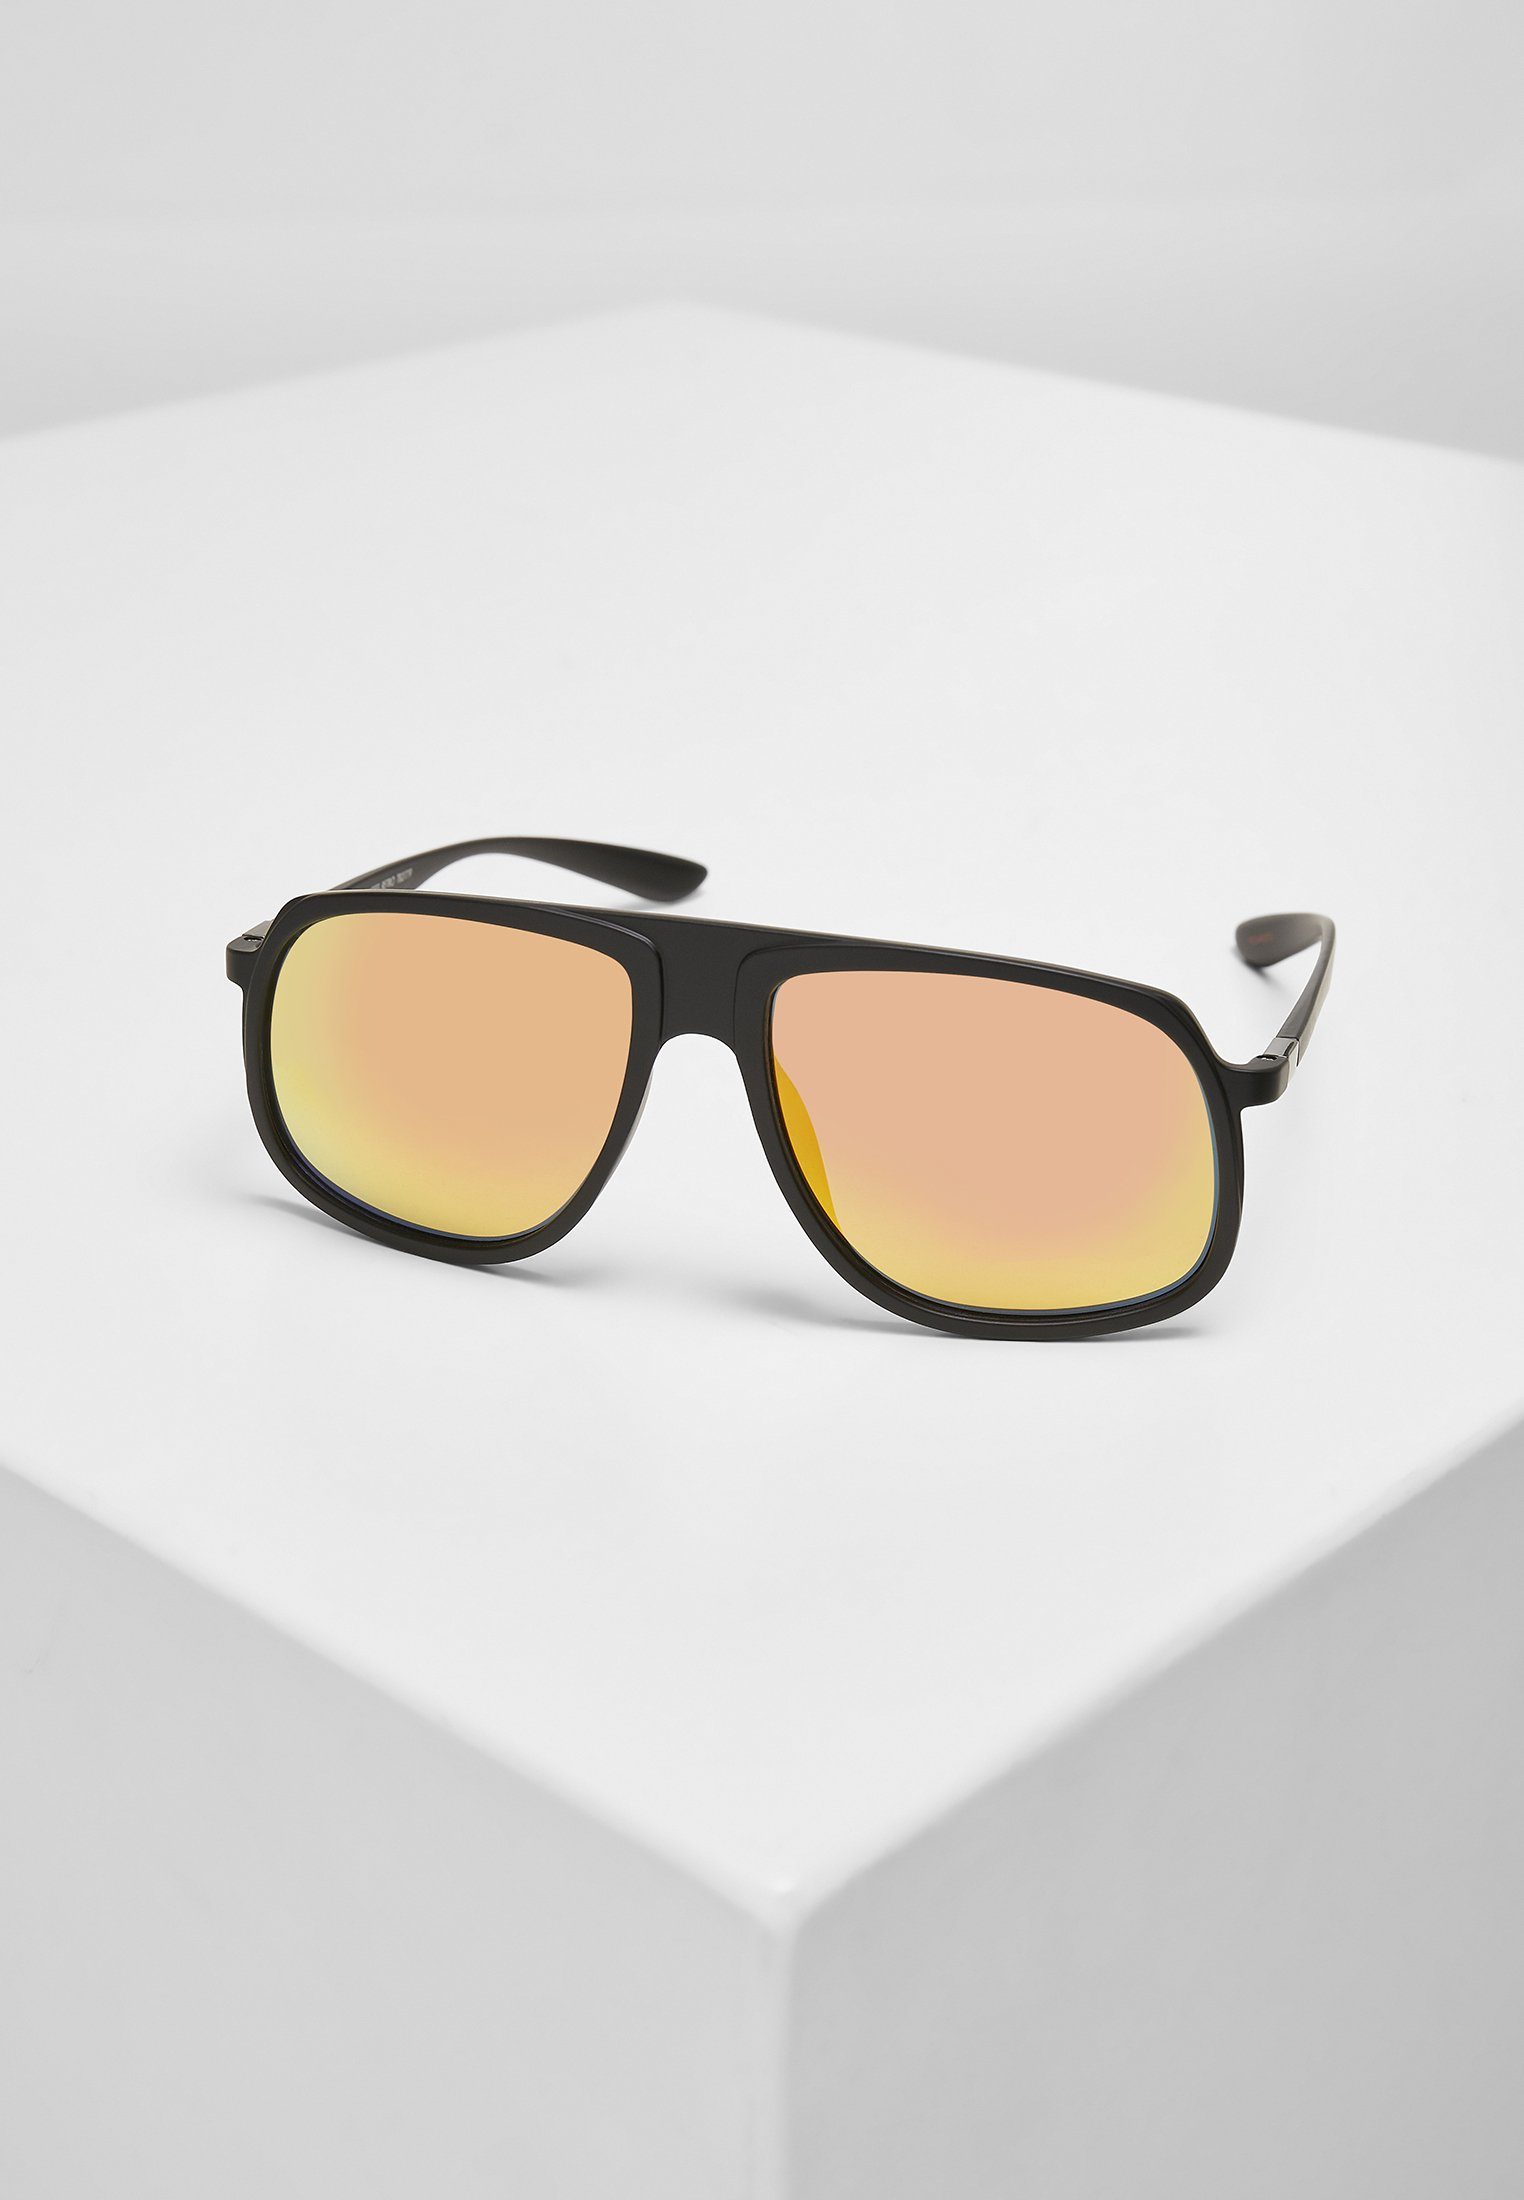 Sonnenbrille URBAN Accessoires 107 Chain Sunglasses Retro CLASSICS